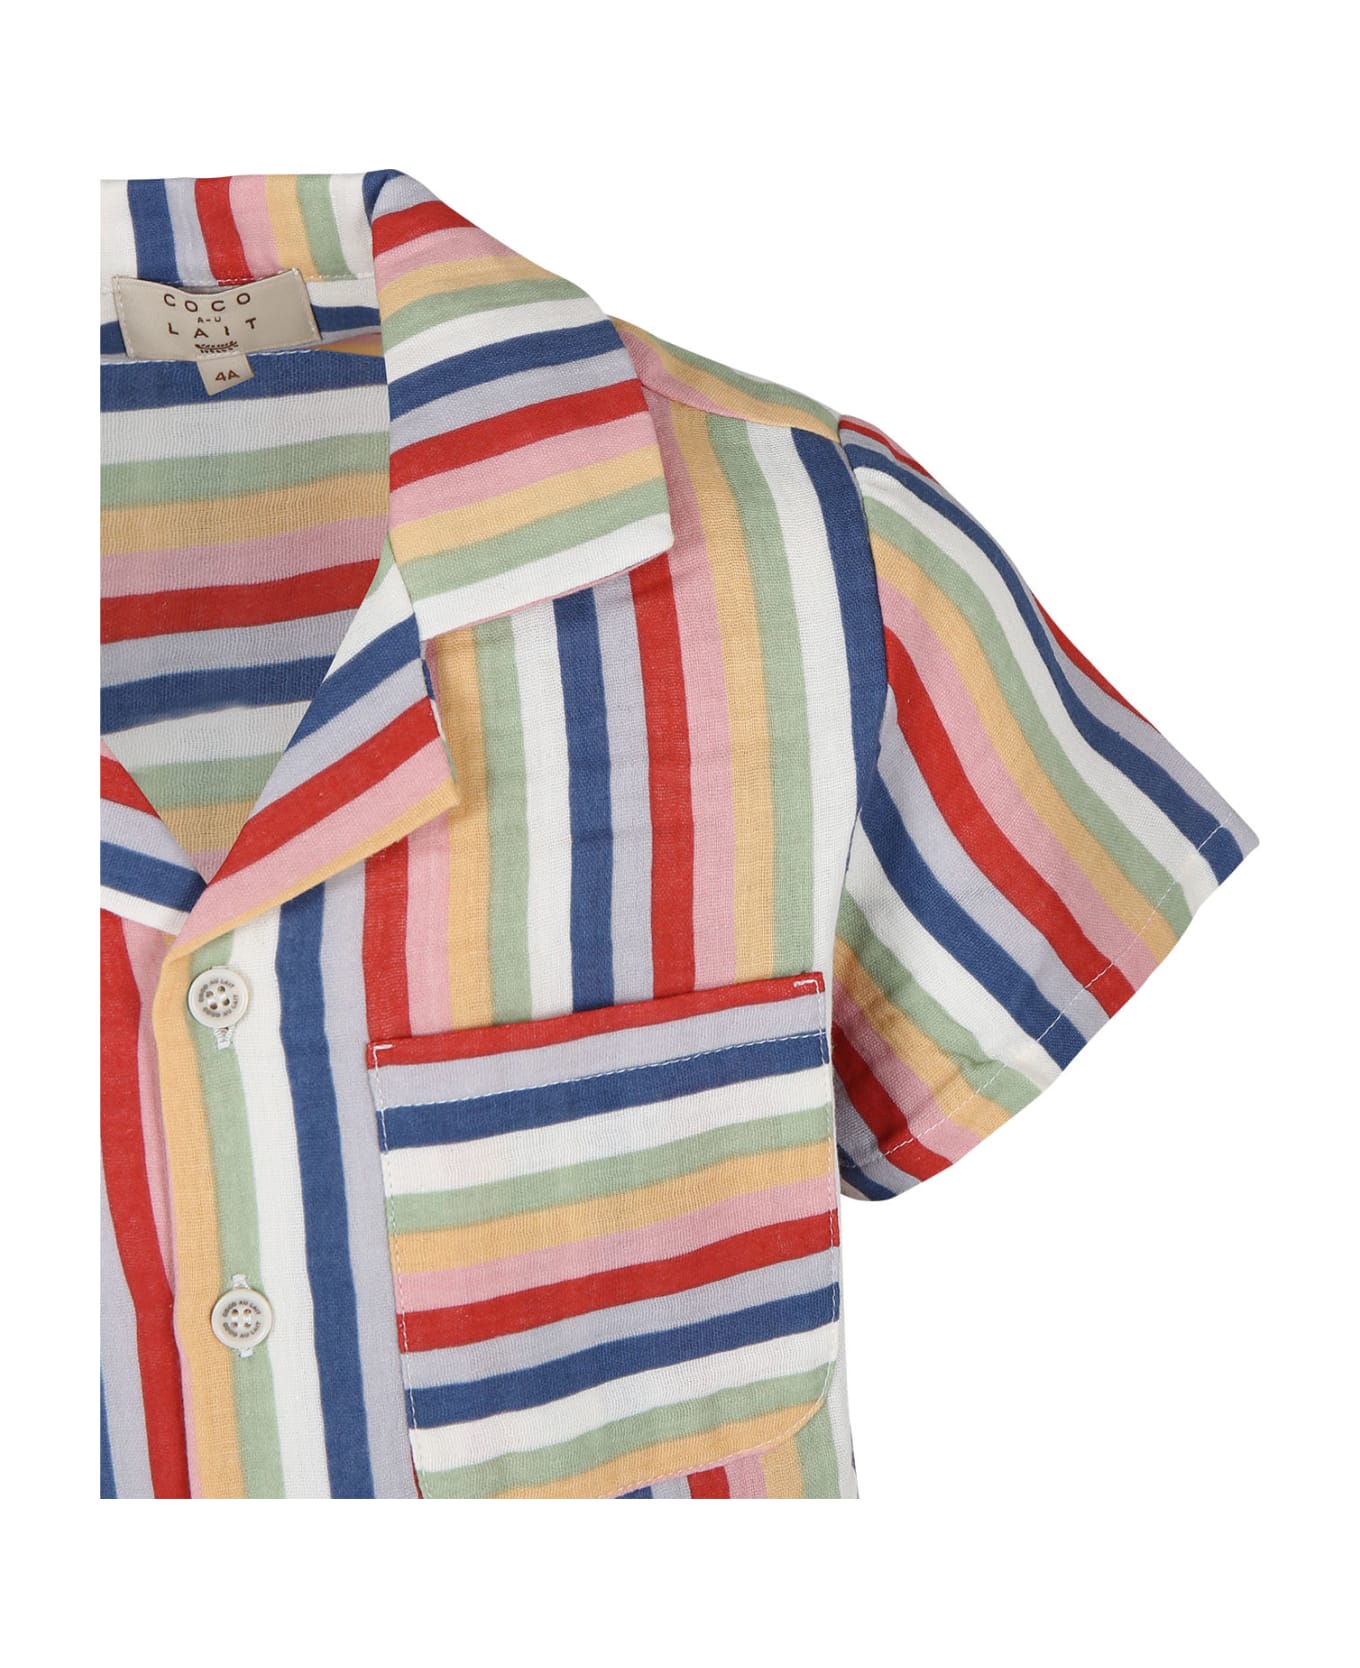 Coco Au Lait Multicolor Shirt For Kids With Stripes Pattern - Multicolor シャツ